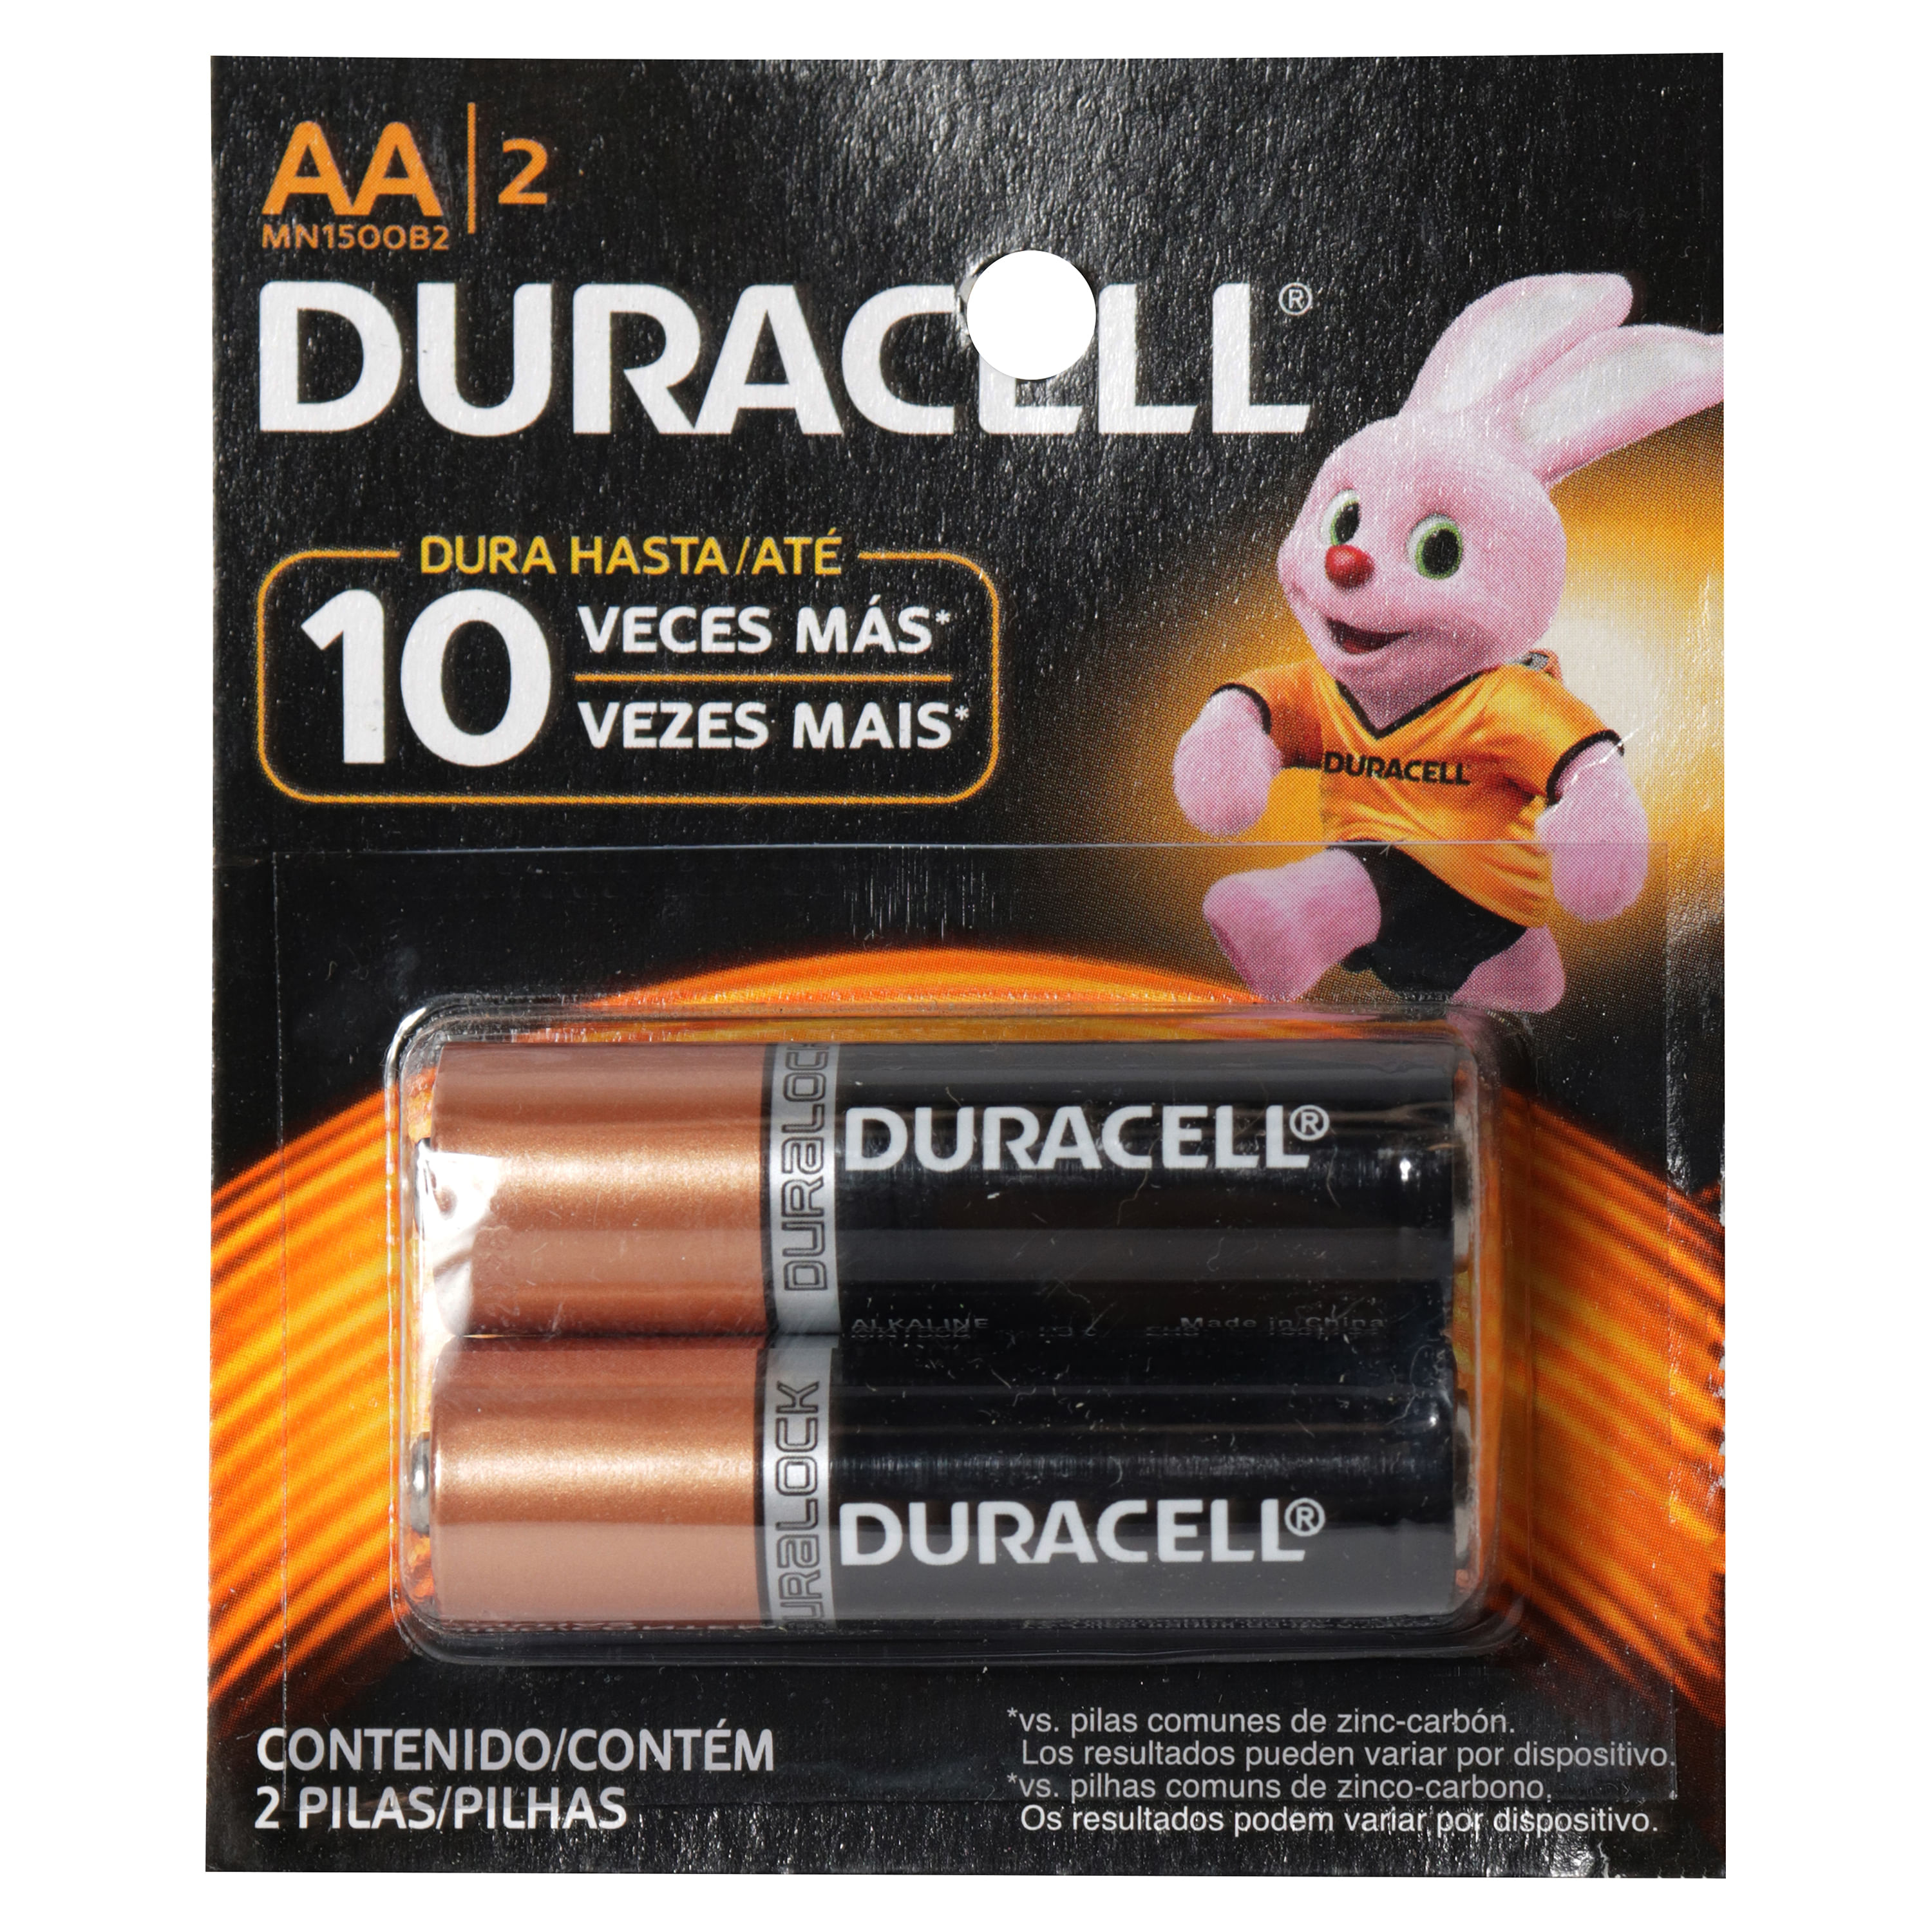 Pilas alcalinas Duracell x 6 unidades AAA PACK TECNOLOGIA PILAS